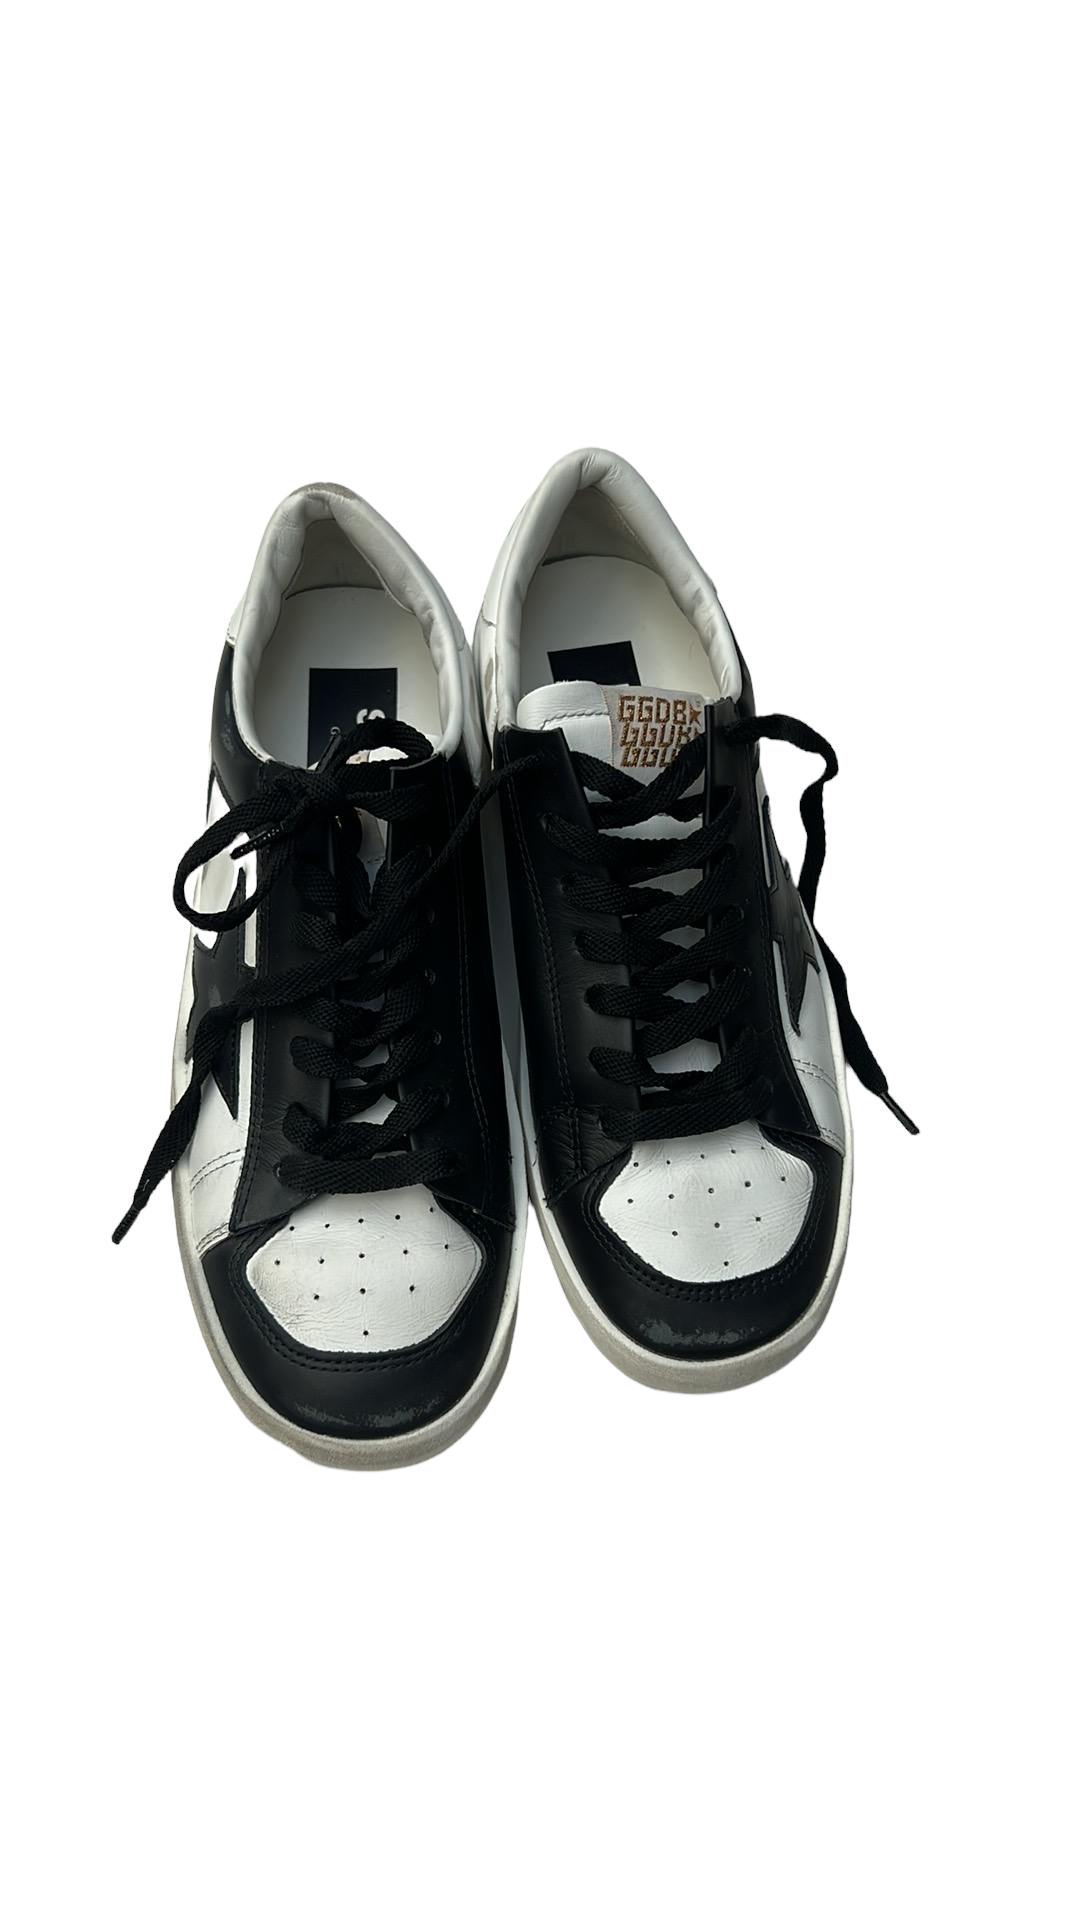 Stardan Black and White Sneakers - 8